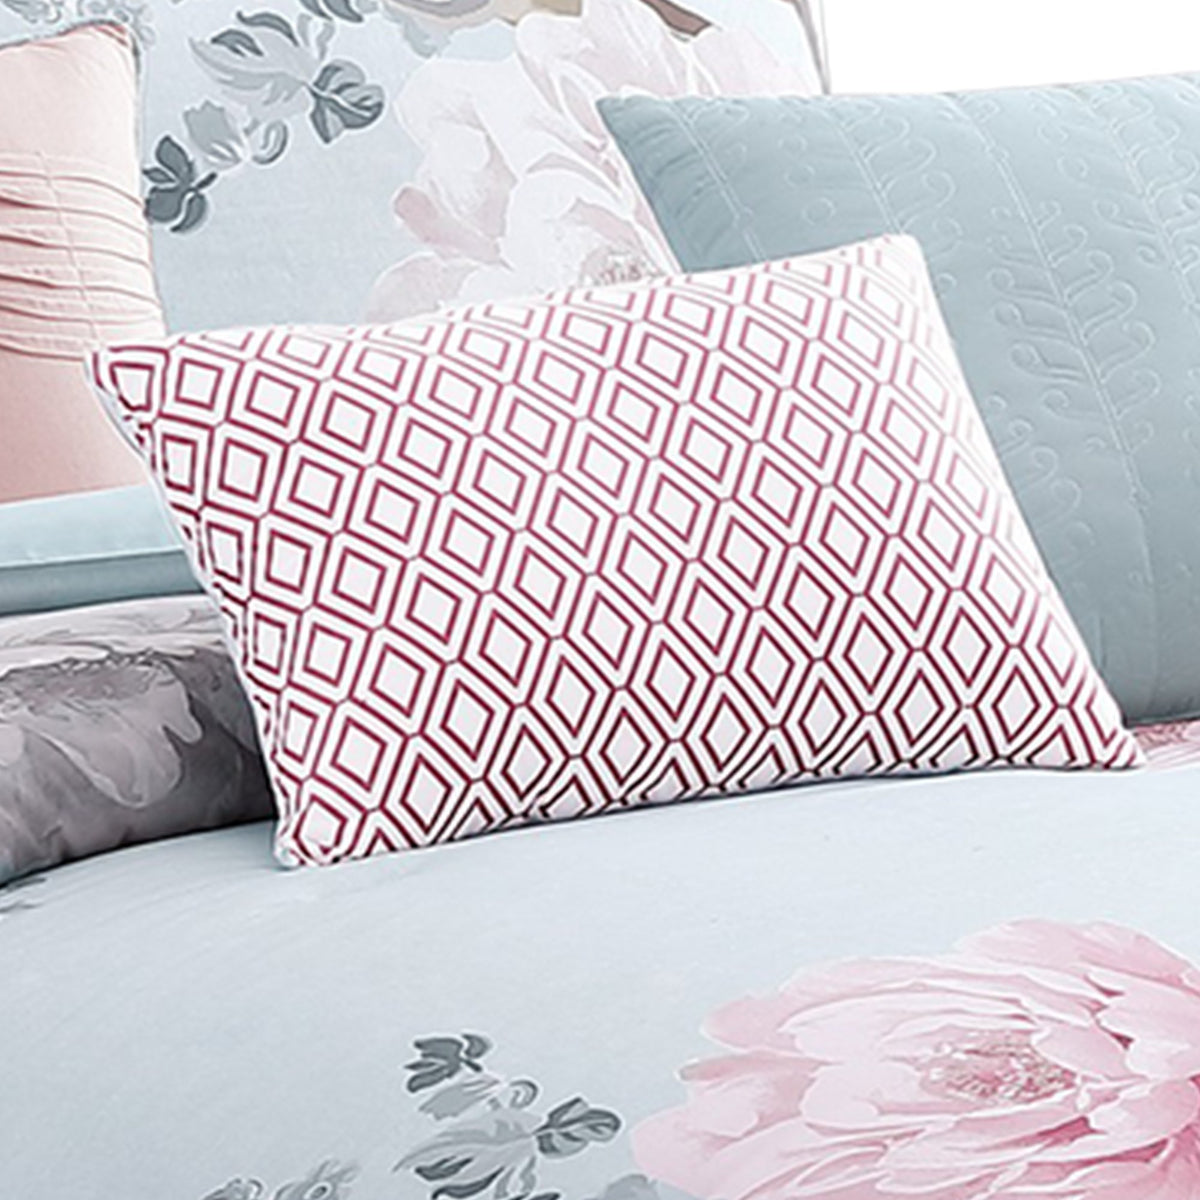 King Size 7 Piece Fabric Comforter Set with Floral Prints, Multicolor - BM225193